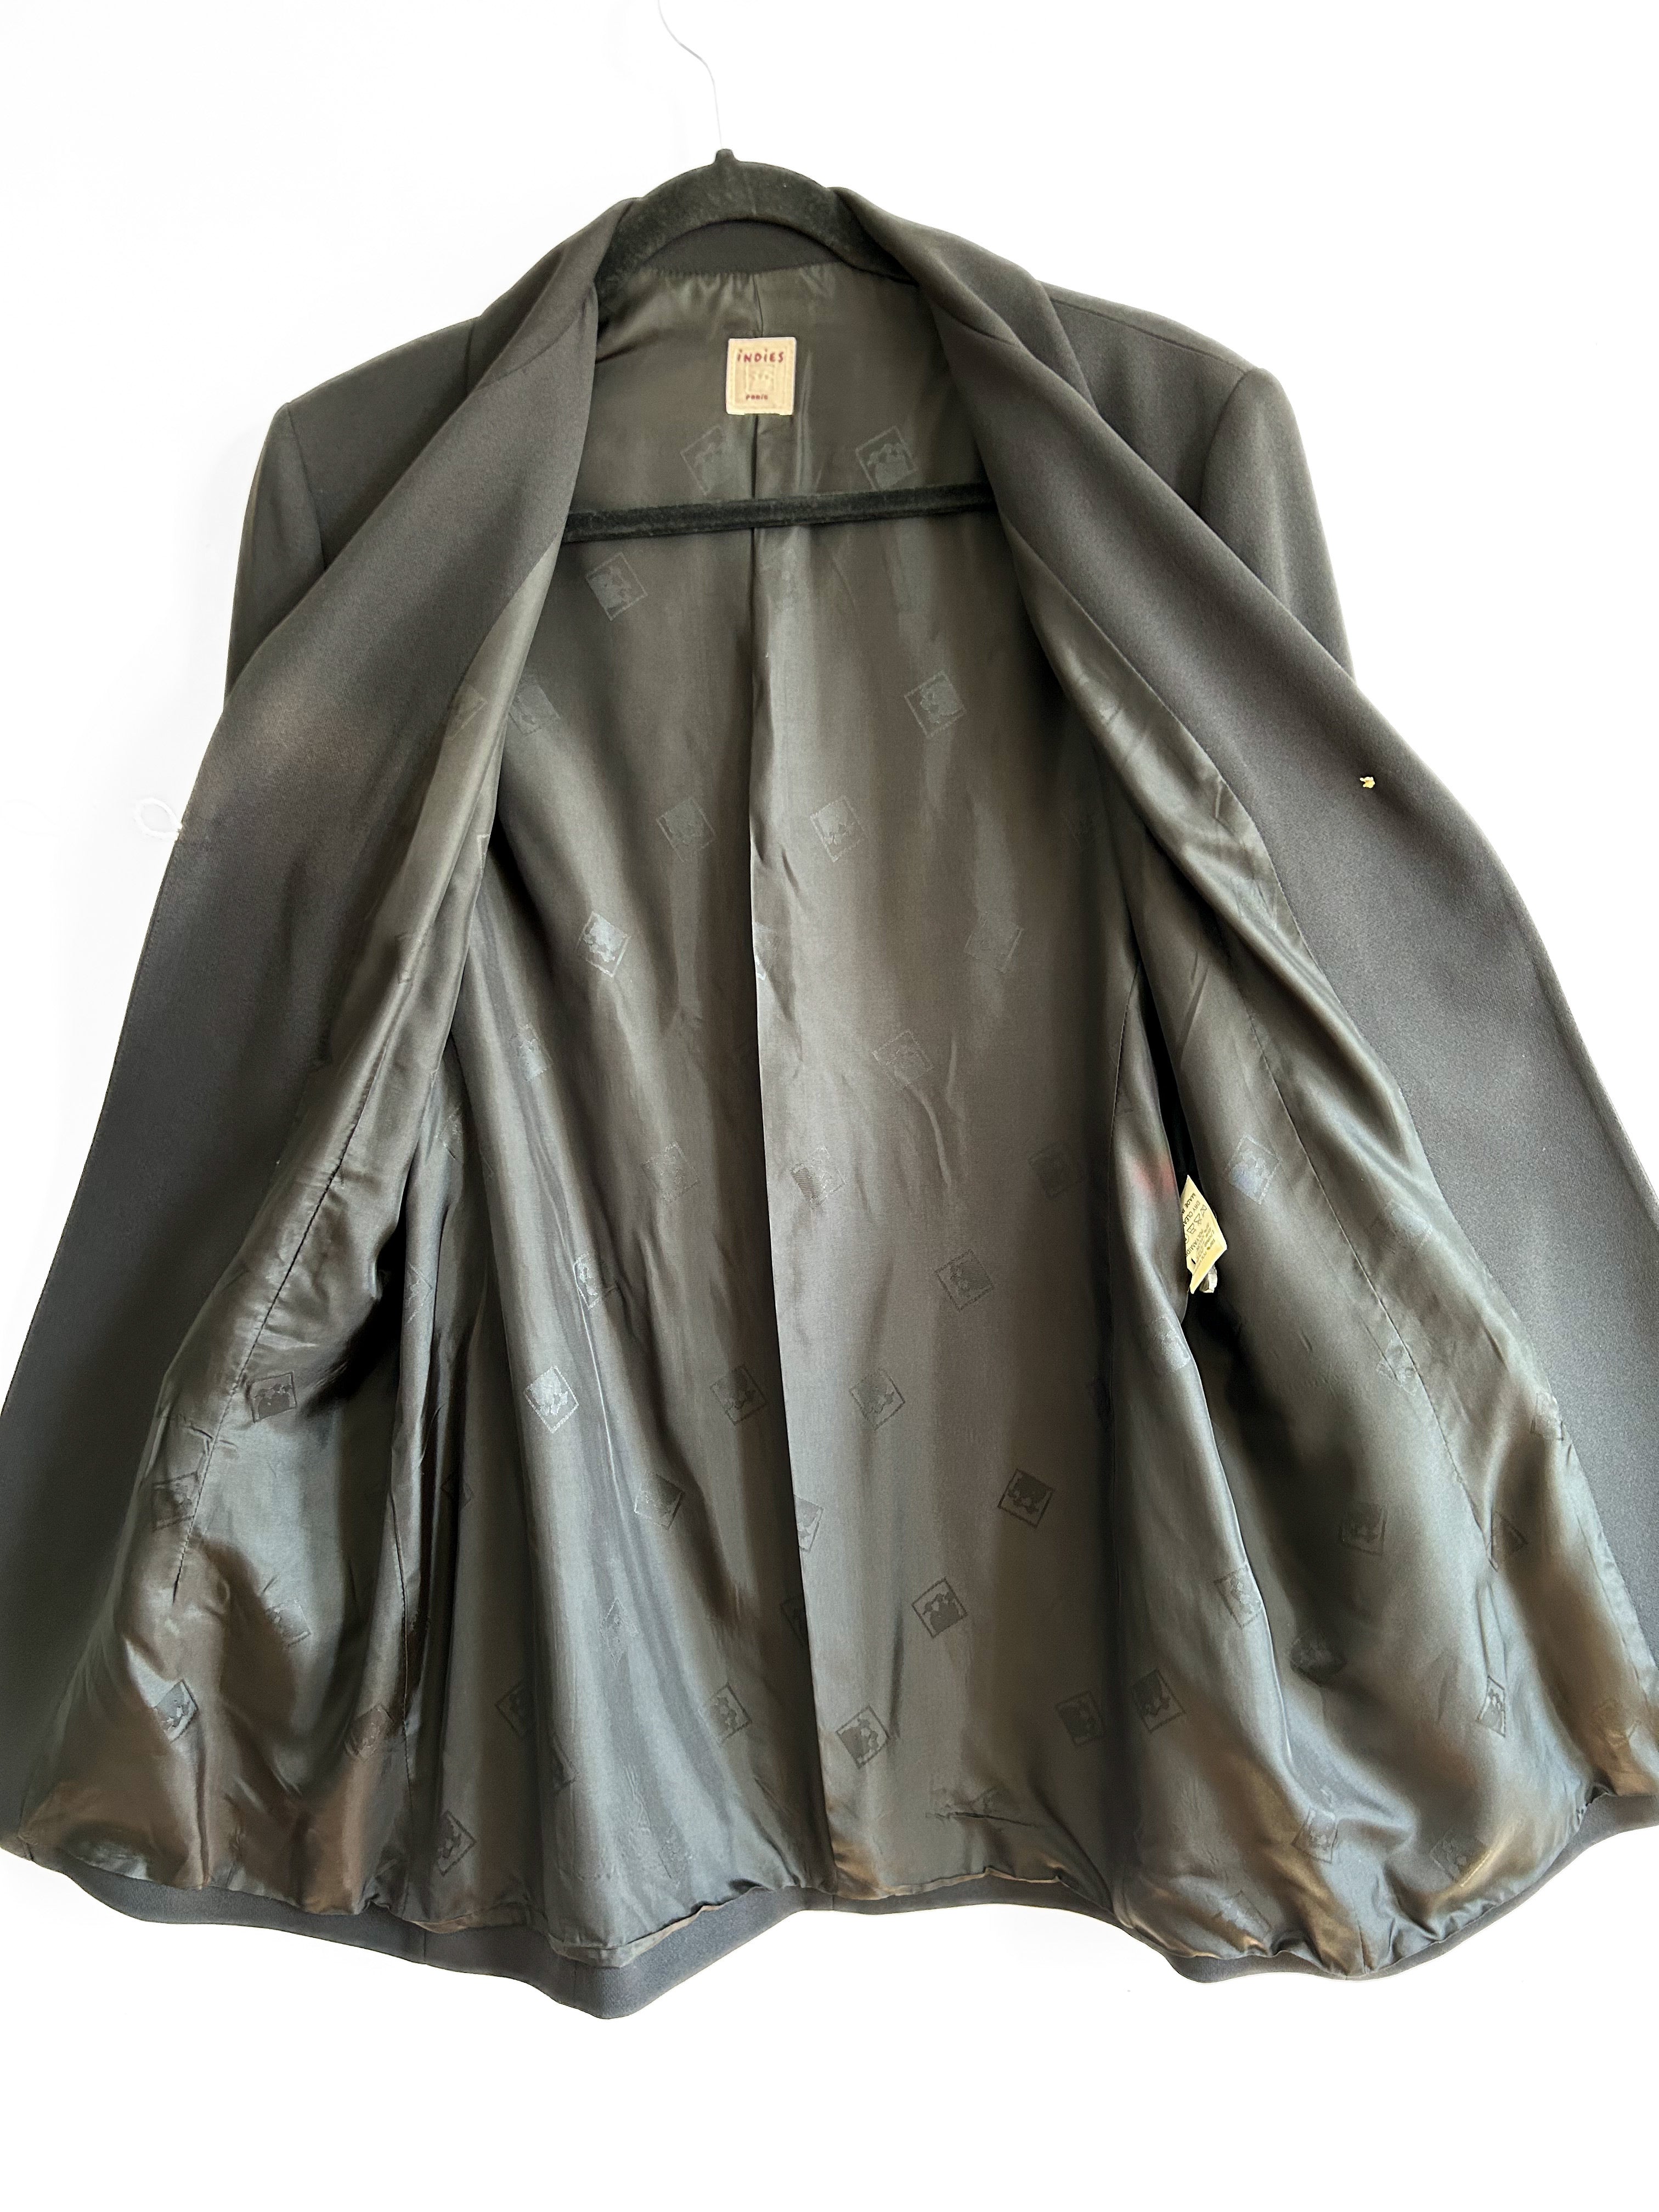 Black Long Blazer Jacket by Indies Paris, Made in France